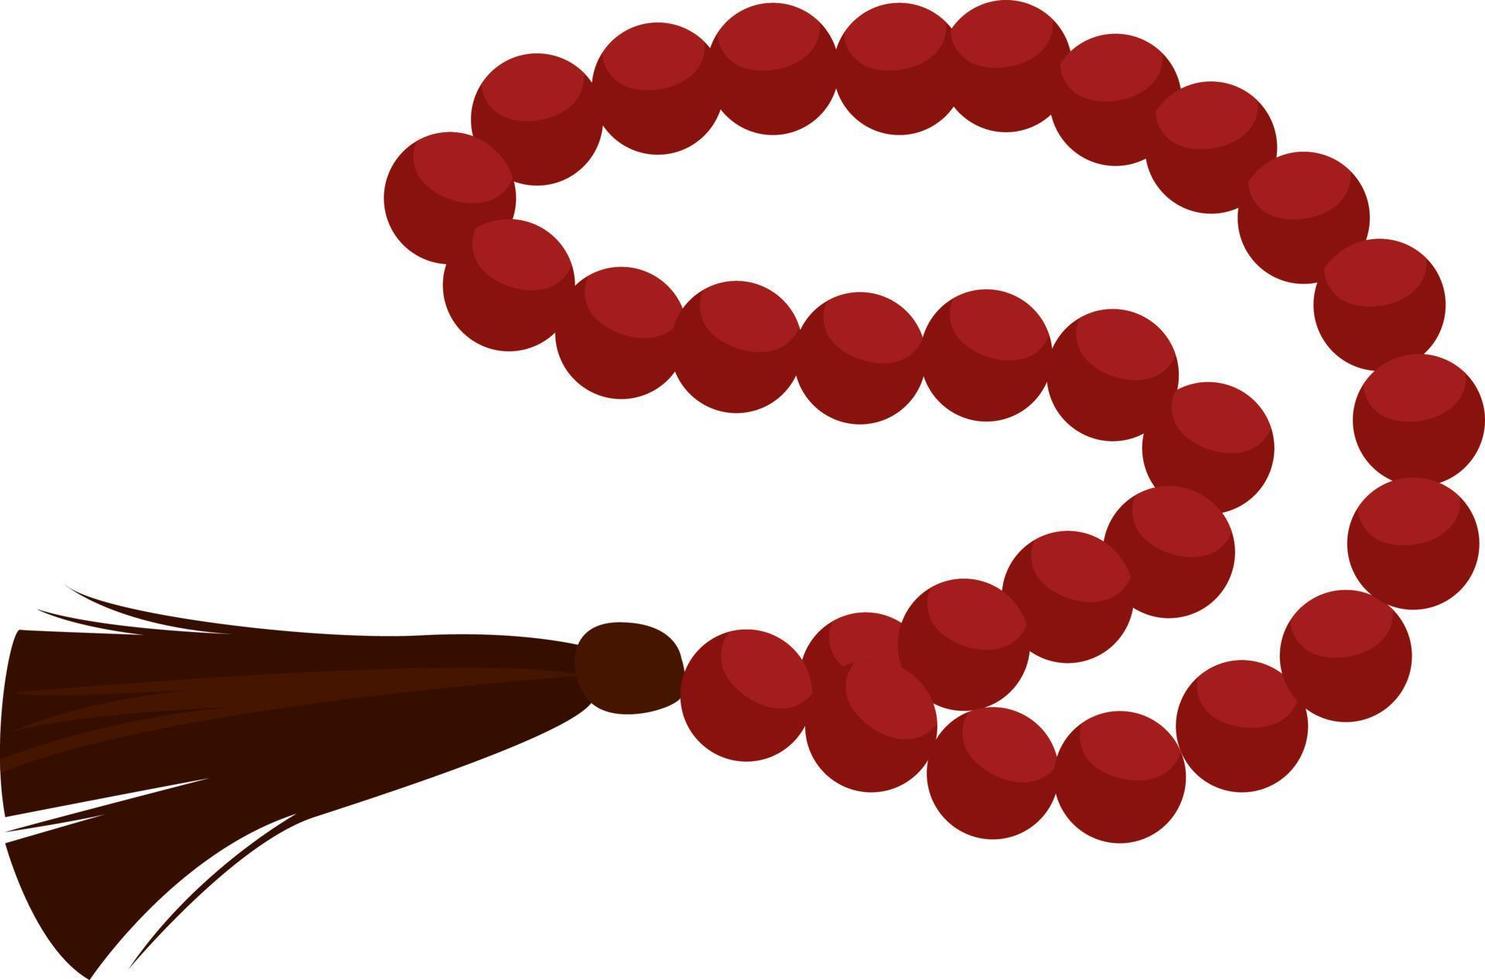 Prayer beads, illustration, vector on a white background.